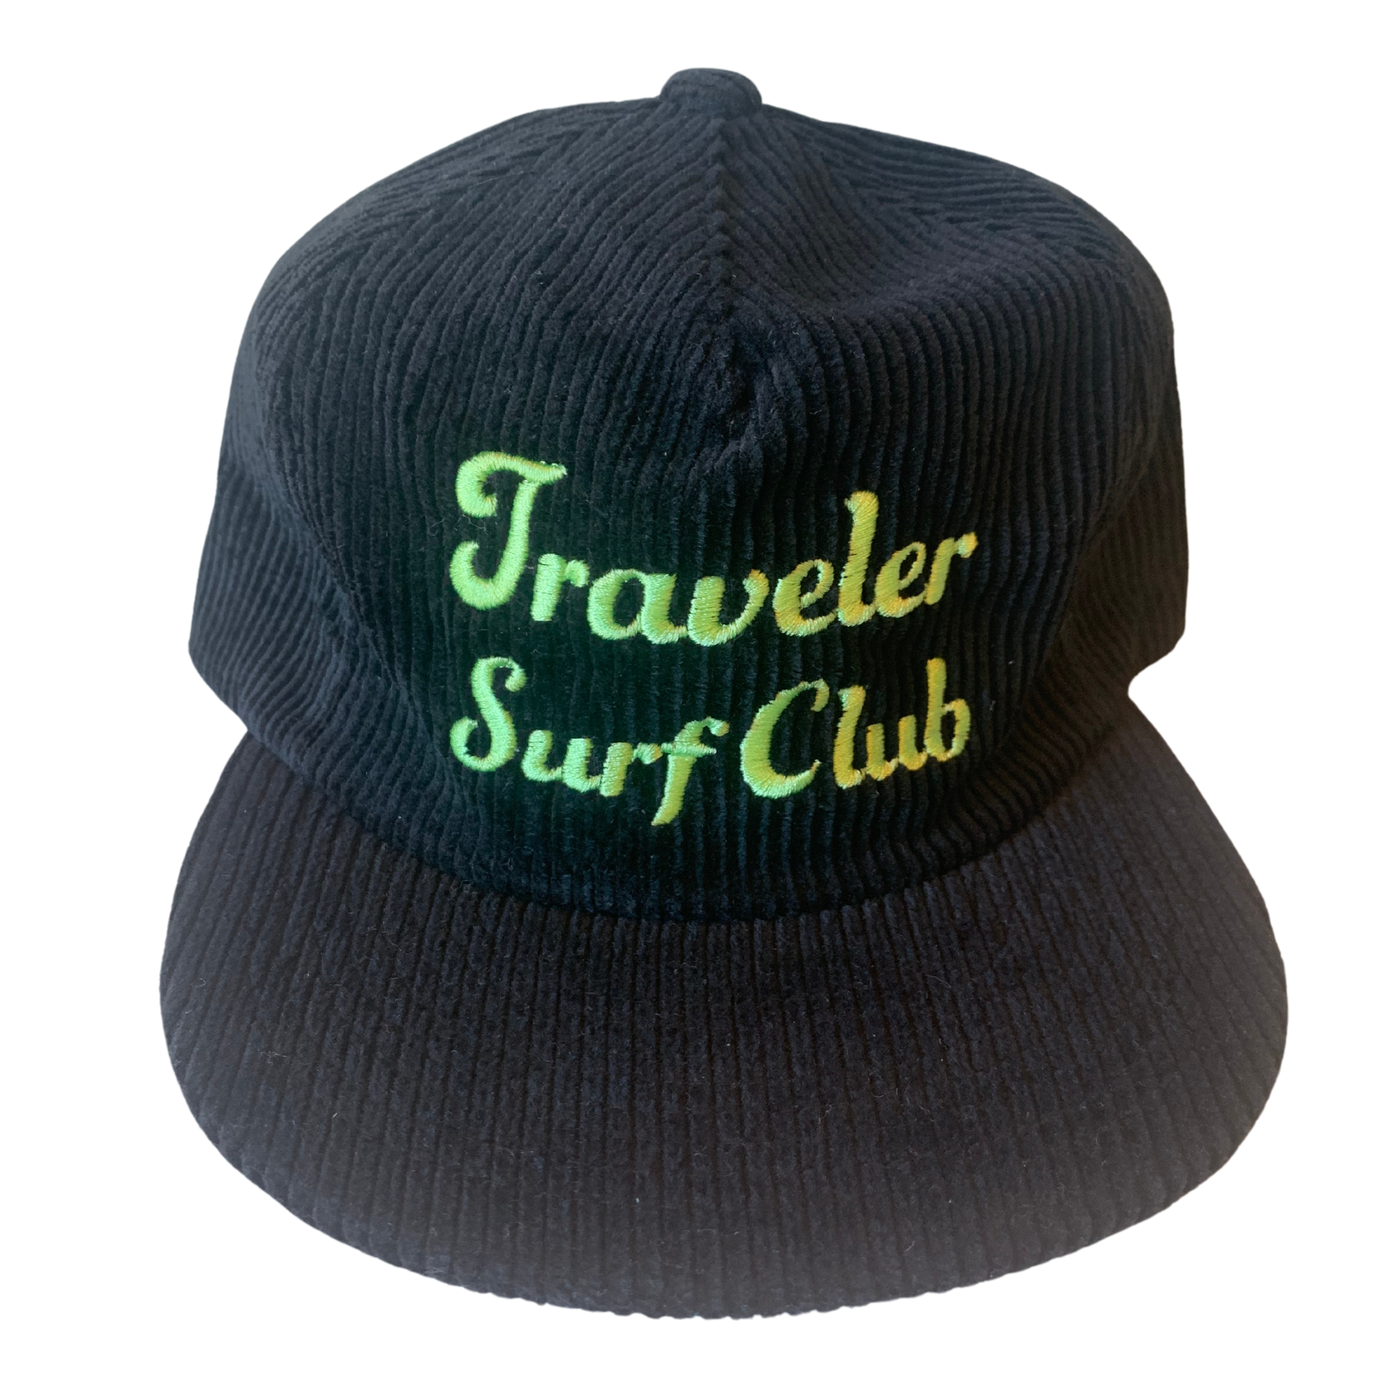 Traveler Surf Club Corduroy Cap